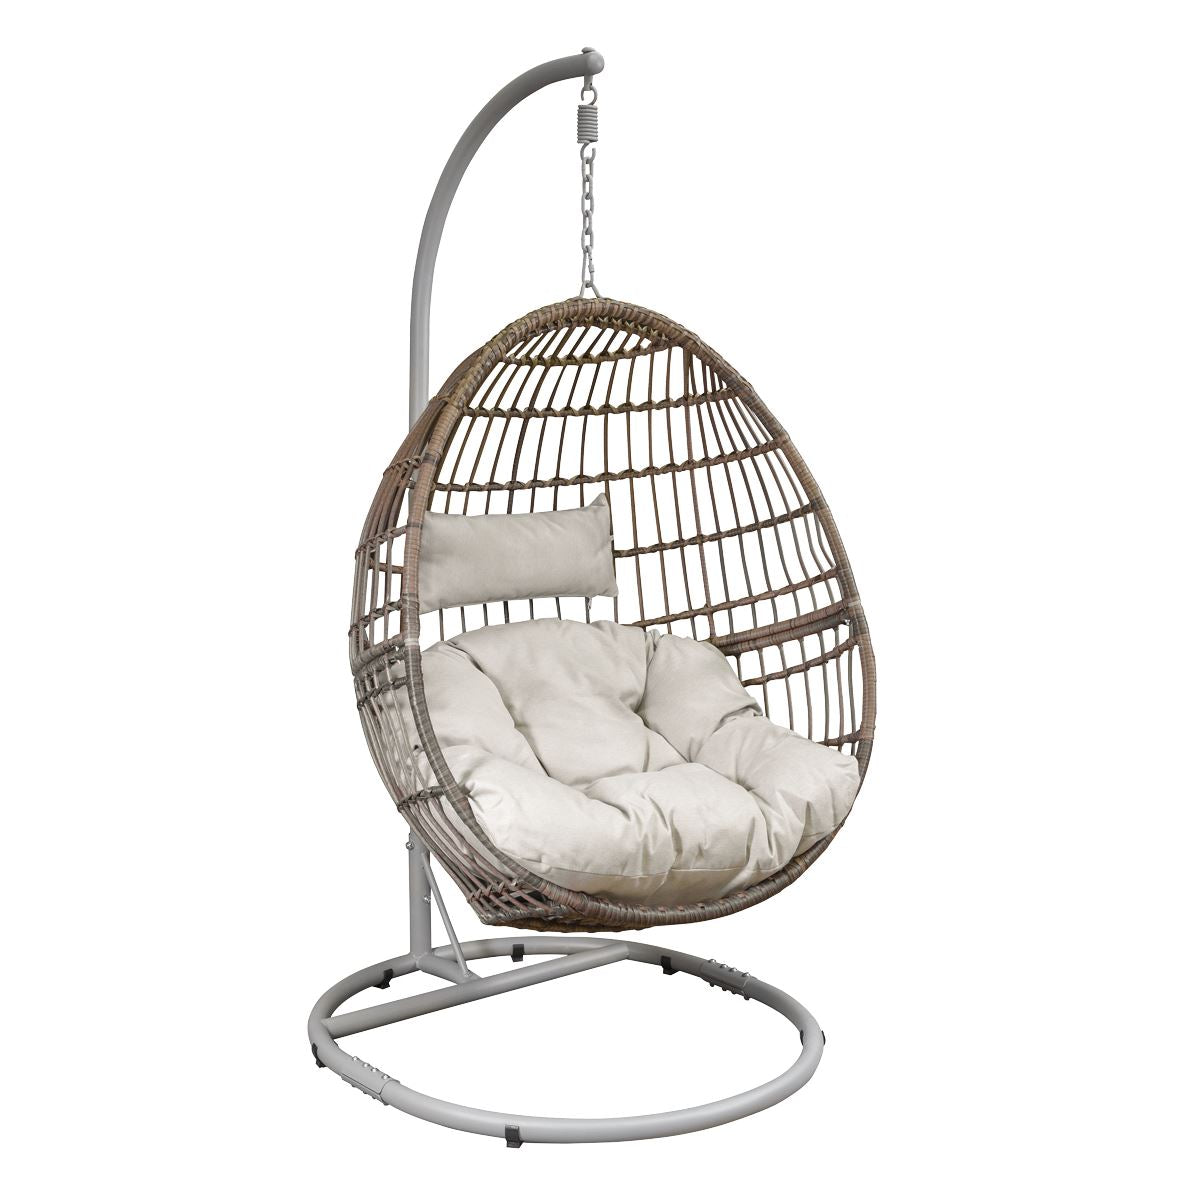 Dellonda Egg Hanging Swing Chair, Wicker Rattan Basket, Steel Frame, Single